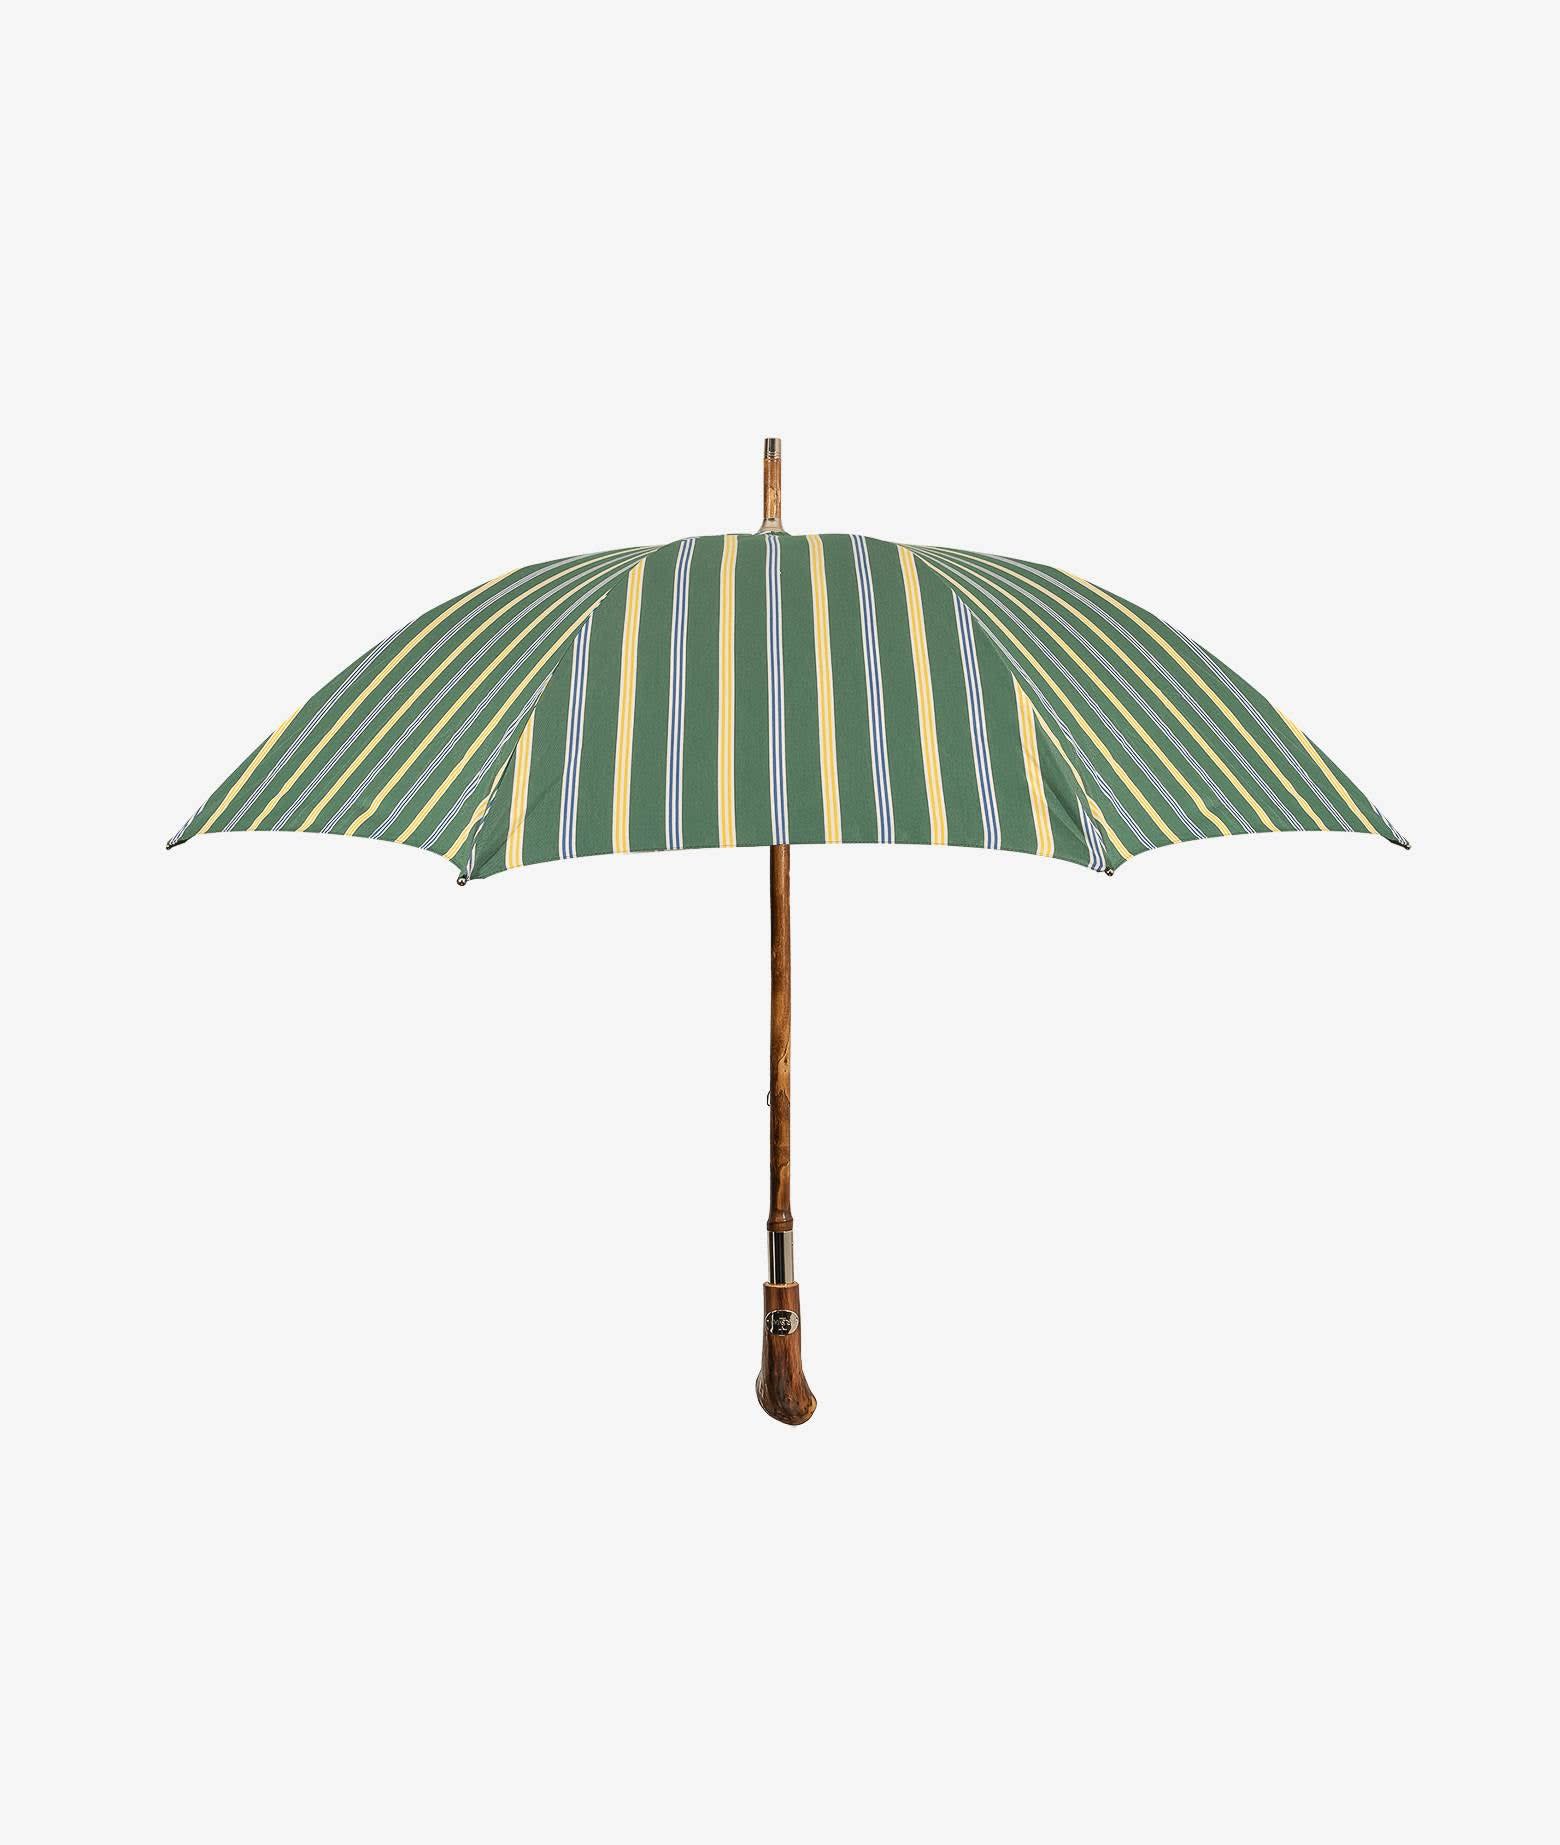 Larusmiani Umbrella Pic Nic Umbrella In Green